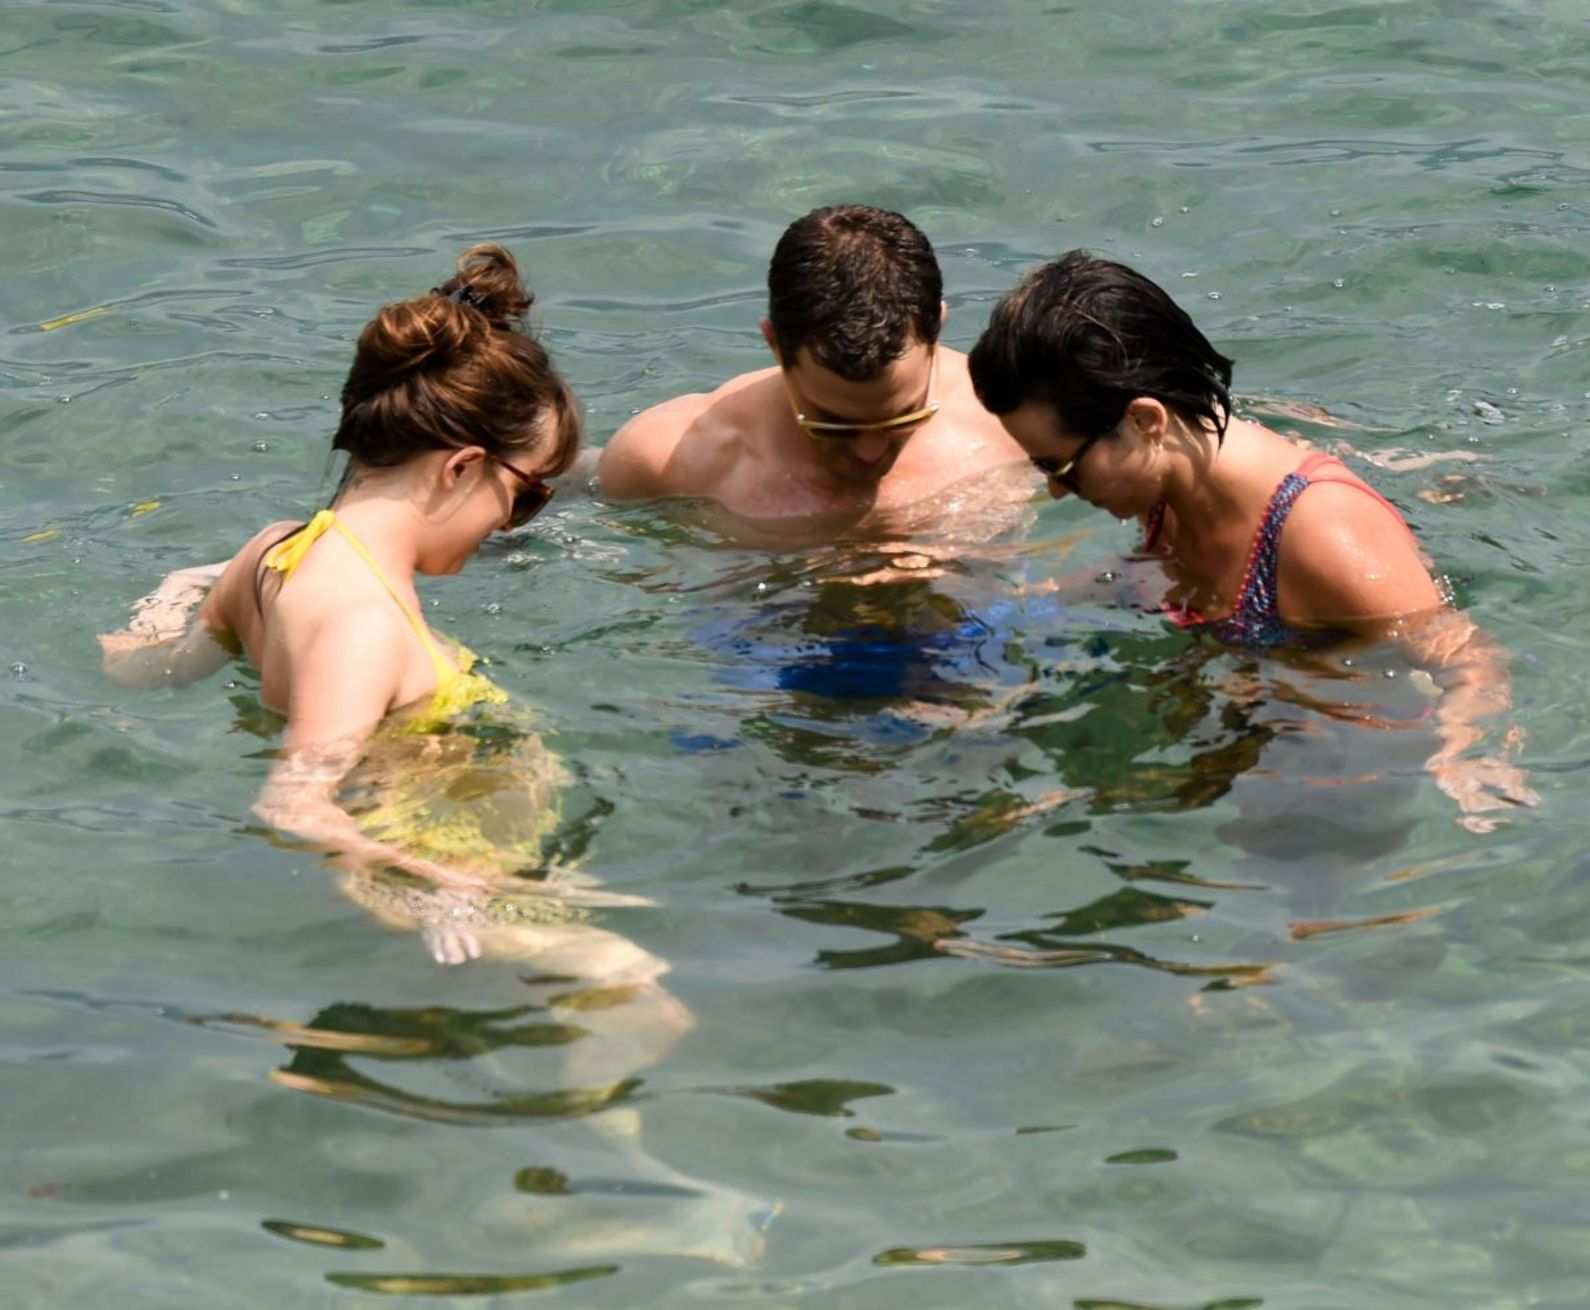 Jamie Dornan Paparazzi Beach Photos Naked Male Celebrities